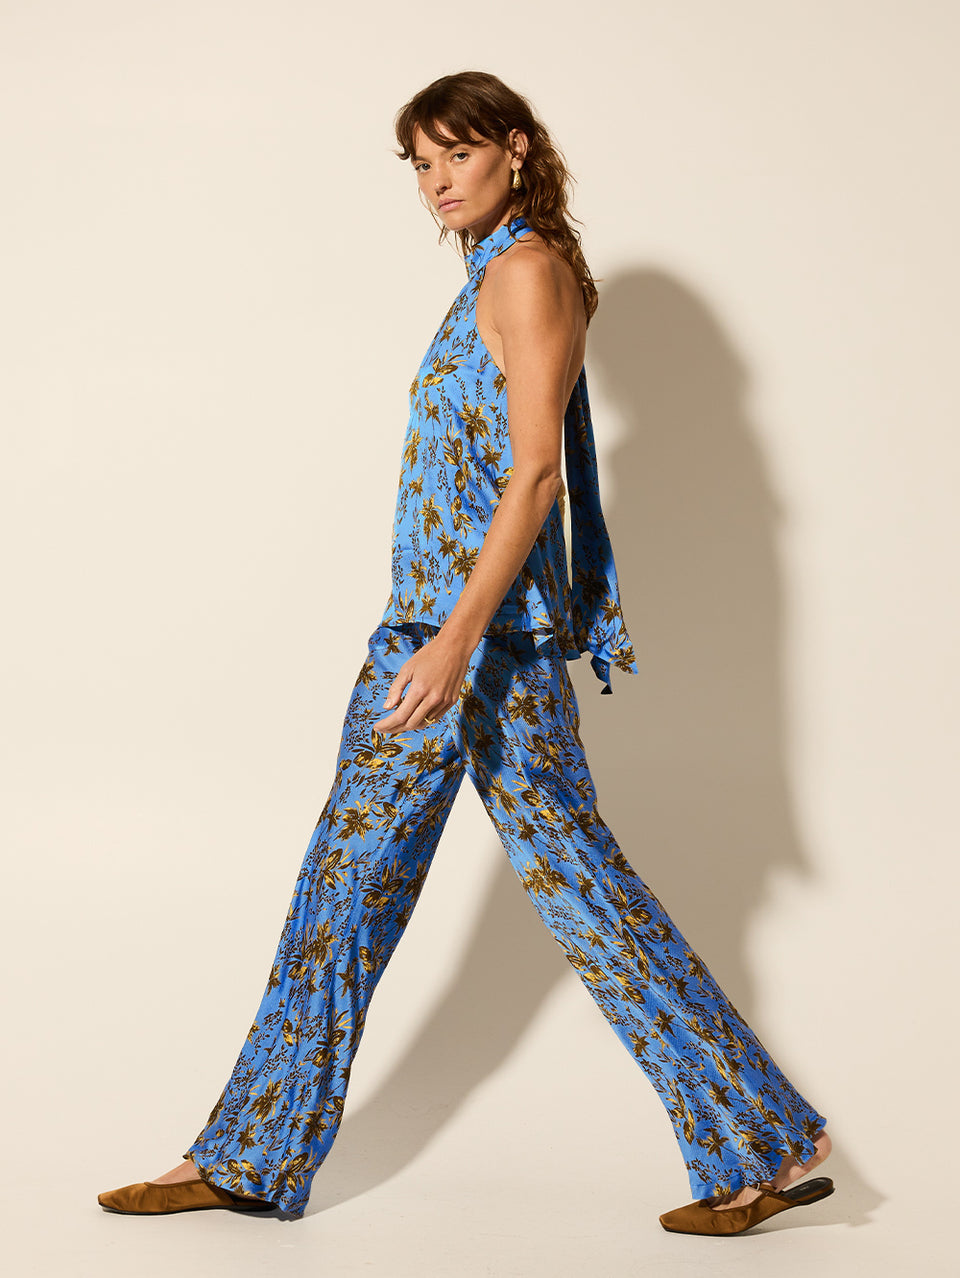 Paola Halter Top KIVARI | Model wears blue halter top side view